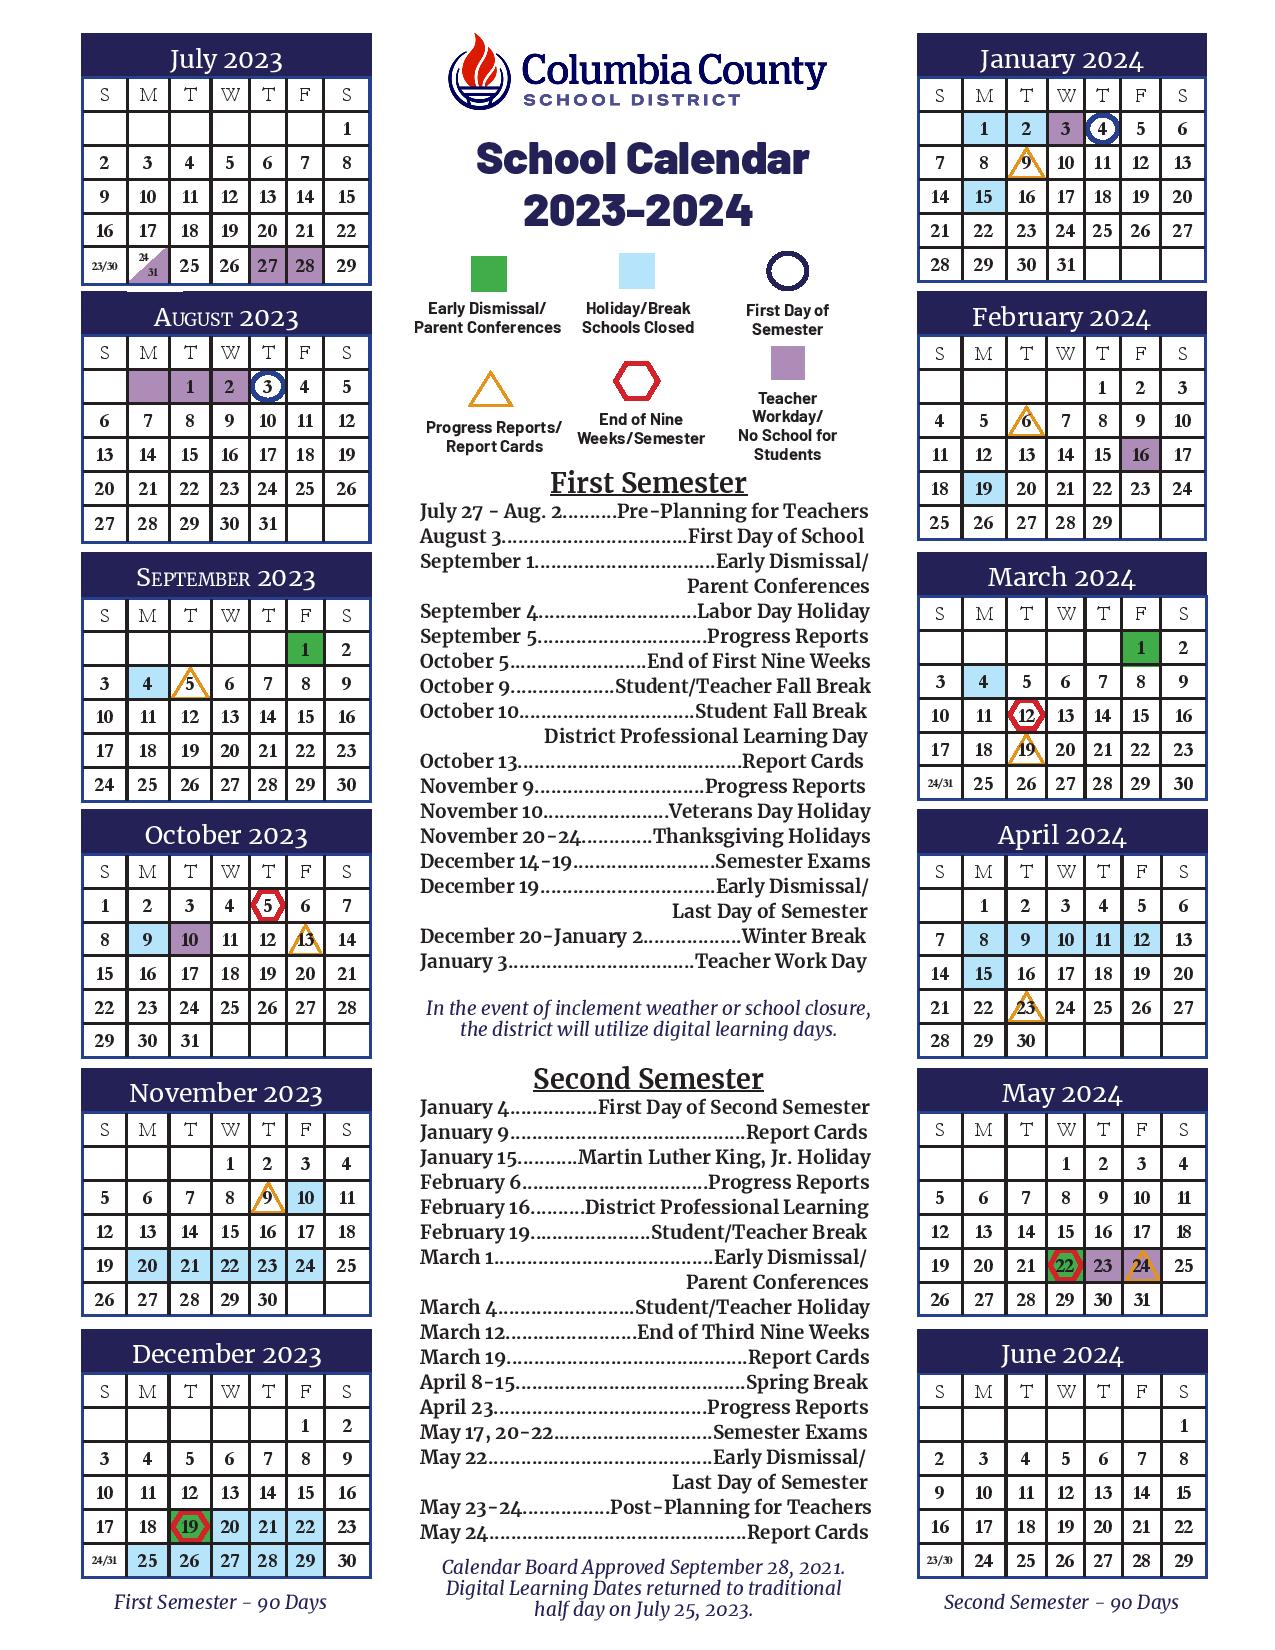 Columbia County School District Calendar 20232024 in PDF